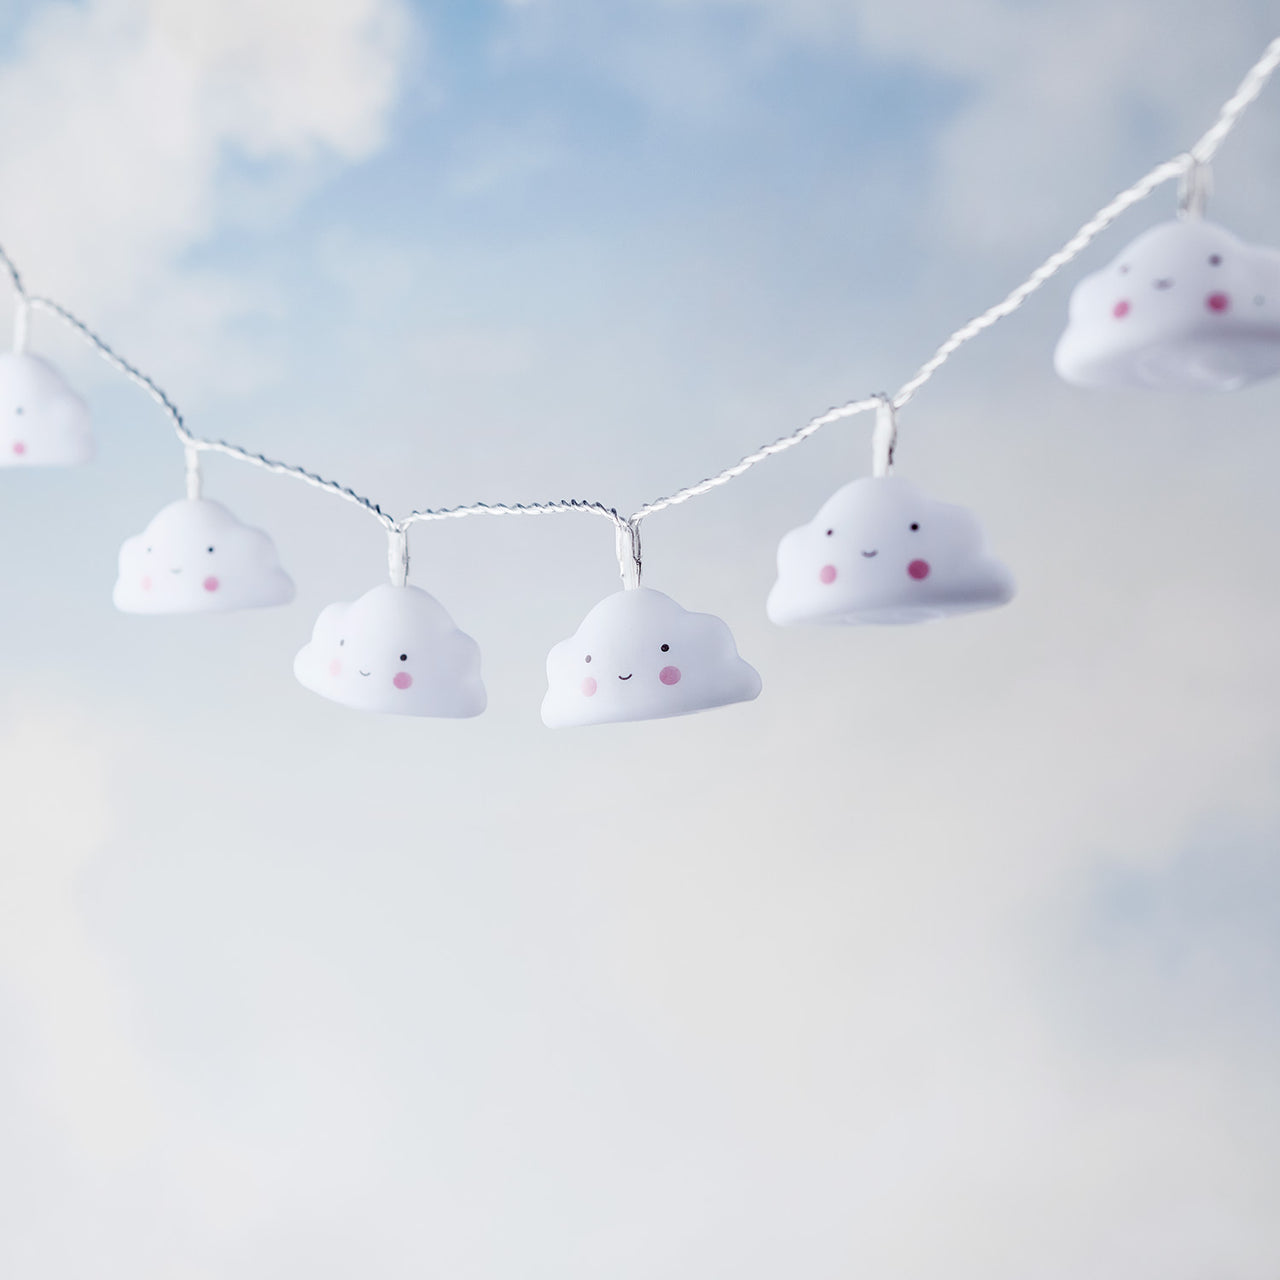 10 Cloud Children's Fairy Lights